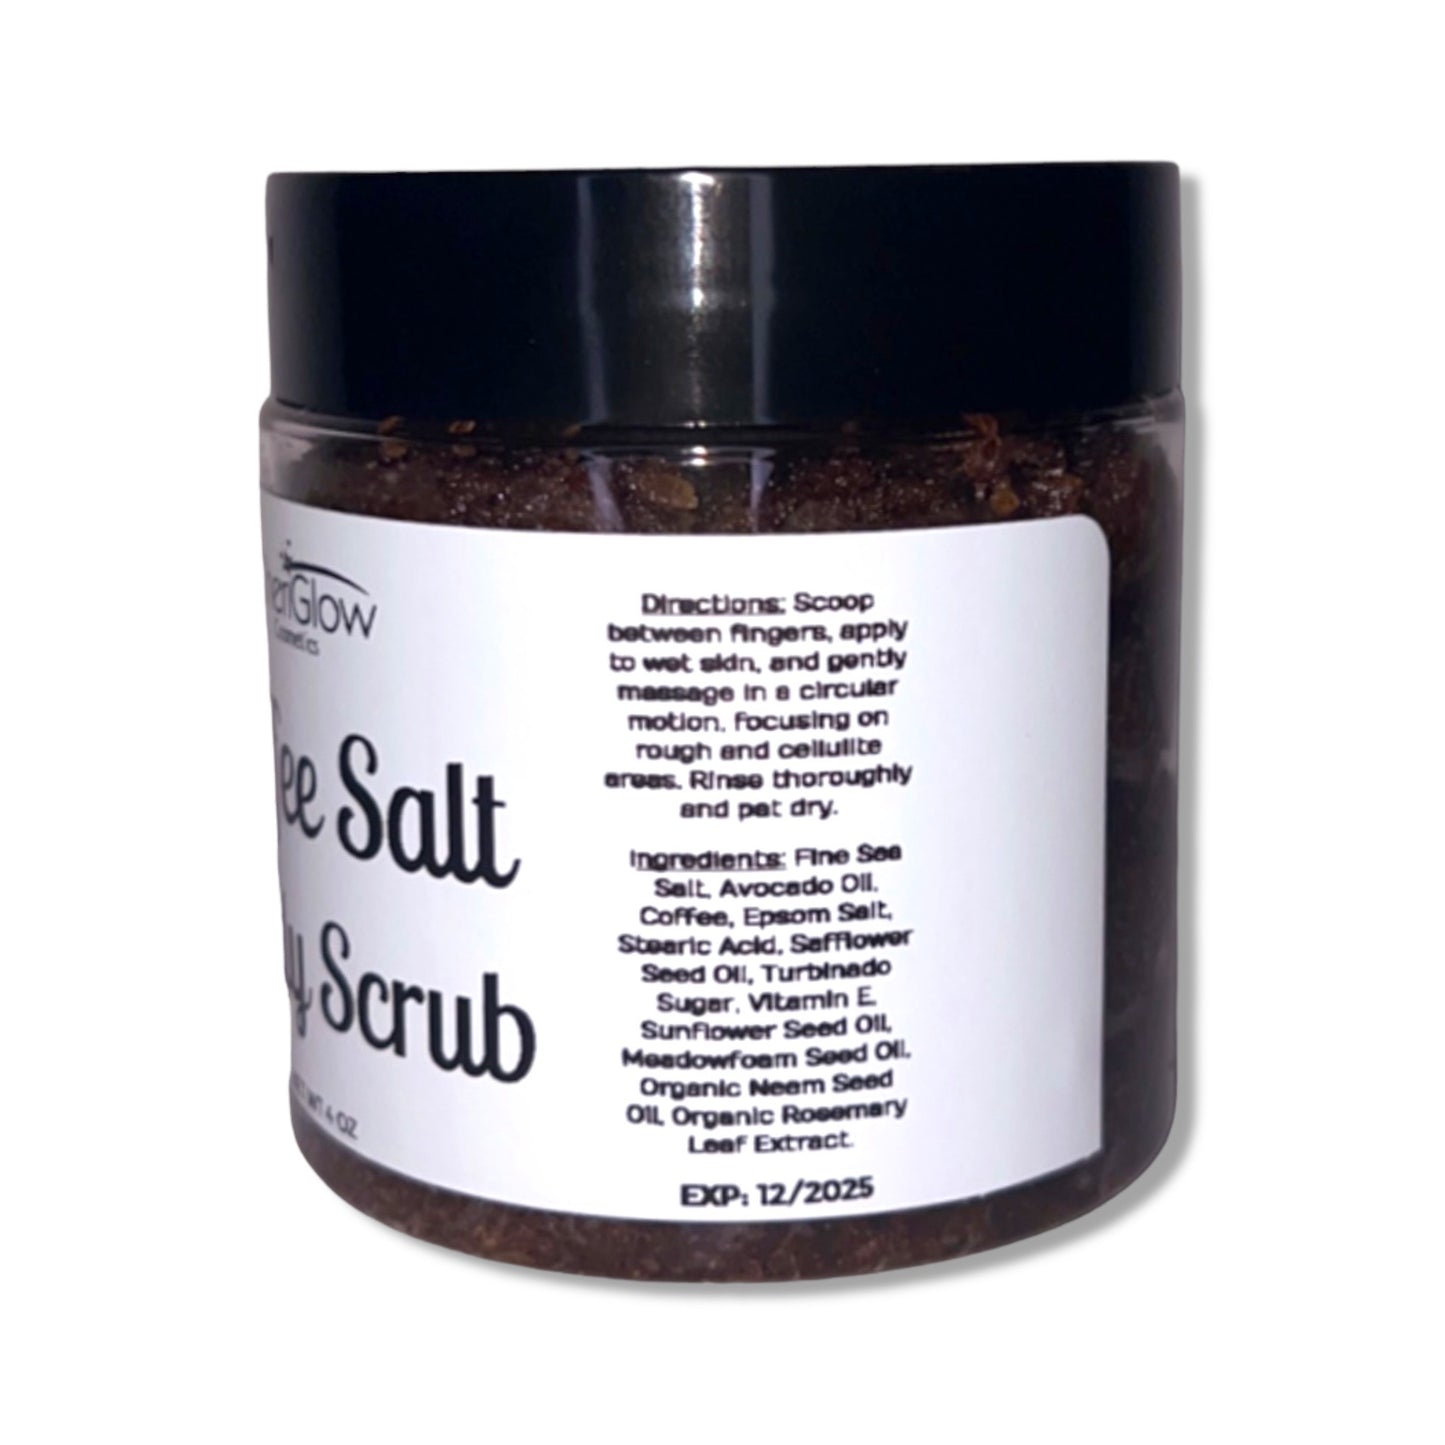 Coffee Salt Body Scrub